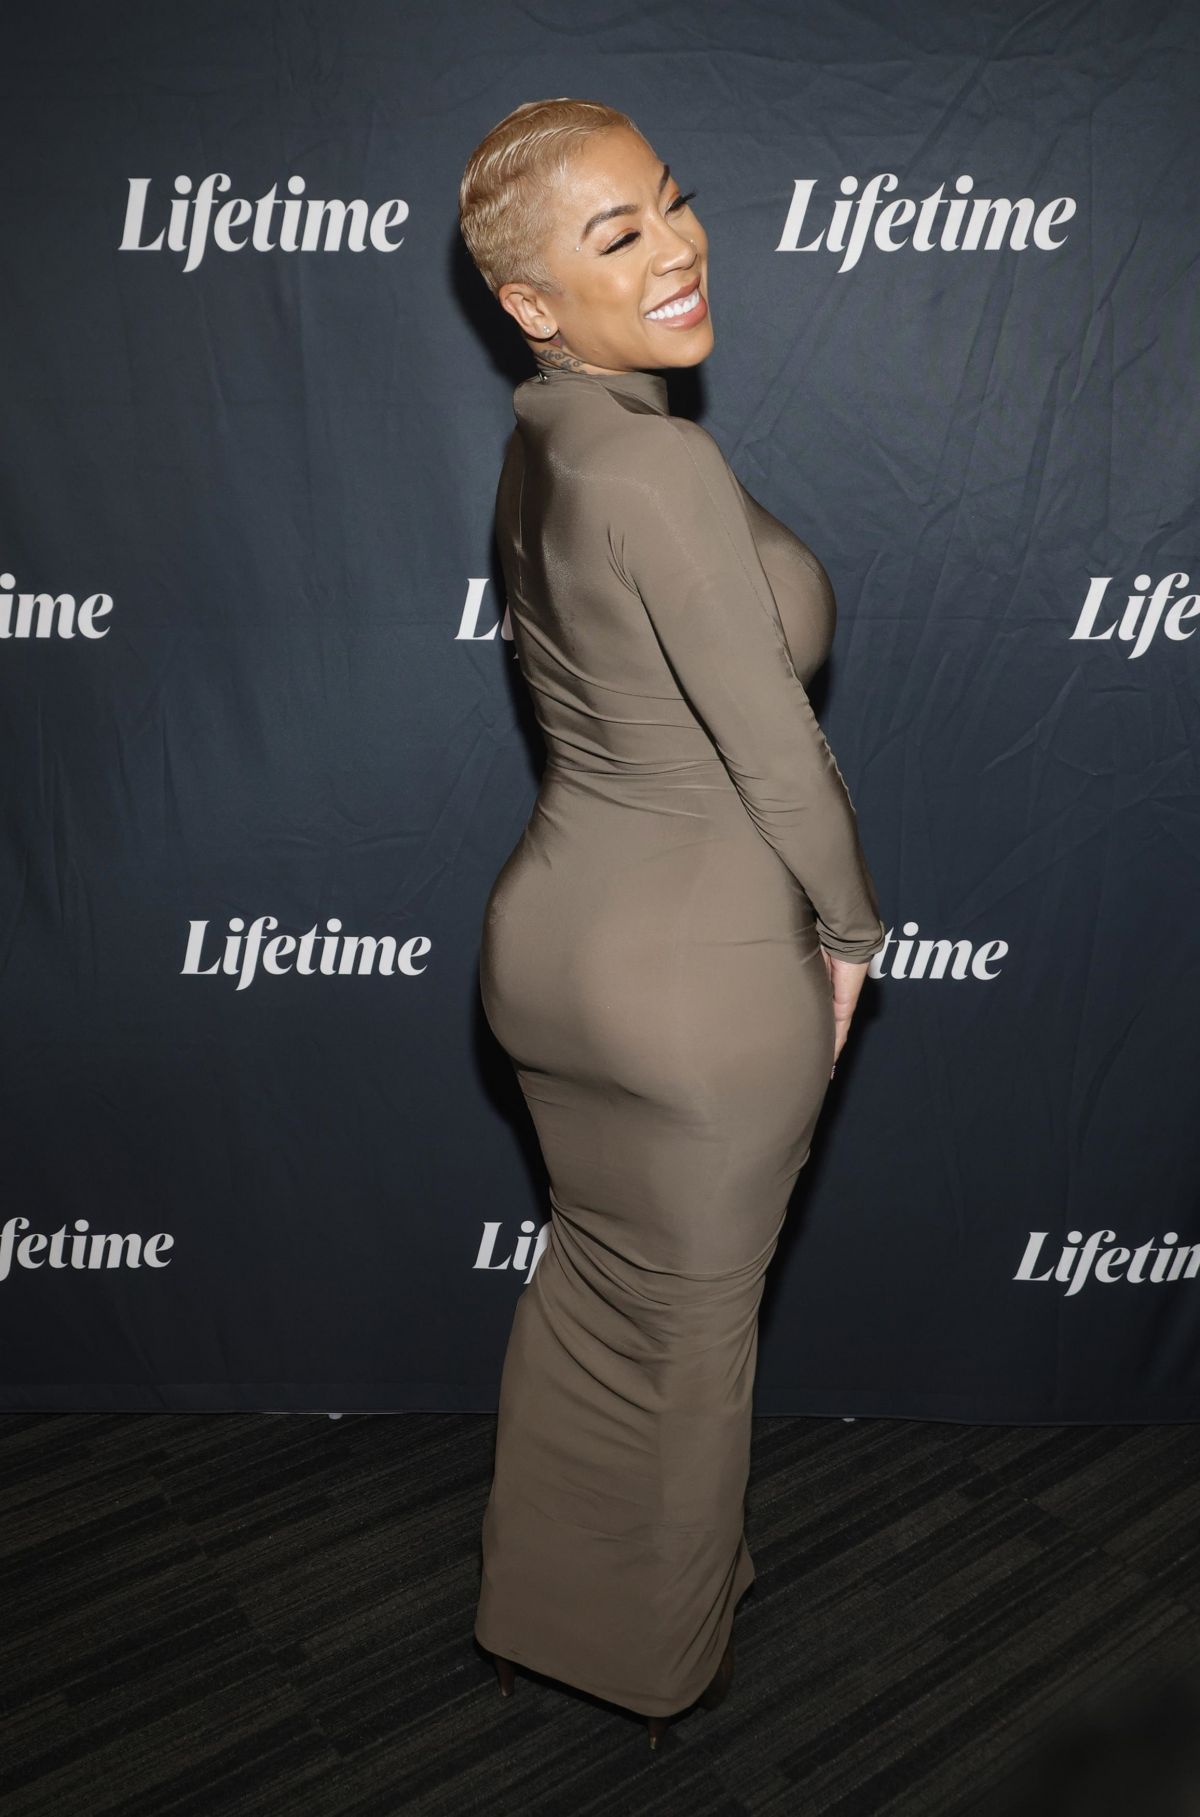 Keyshia Cole steps out in ALAÏA for Lifetime biopic premiere